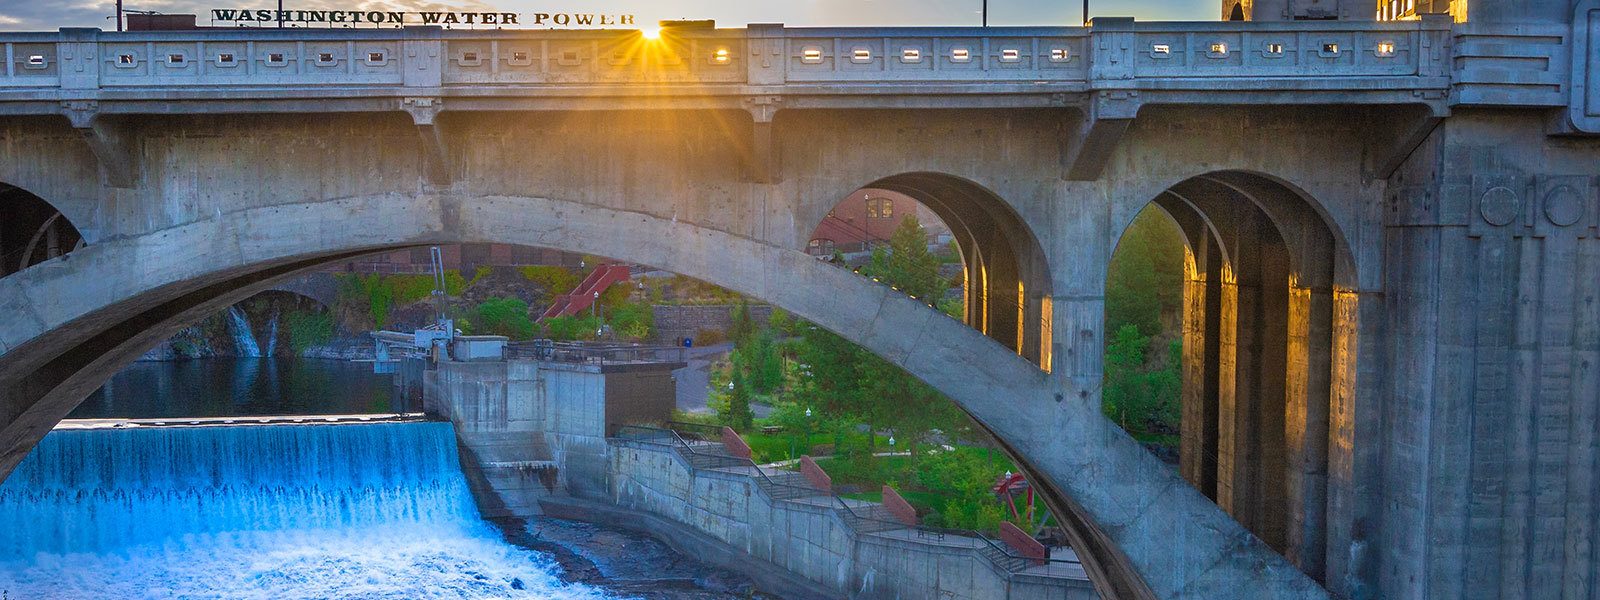 Plan to limit pollution in Spokane River